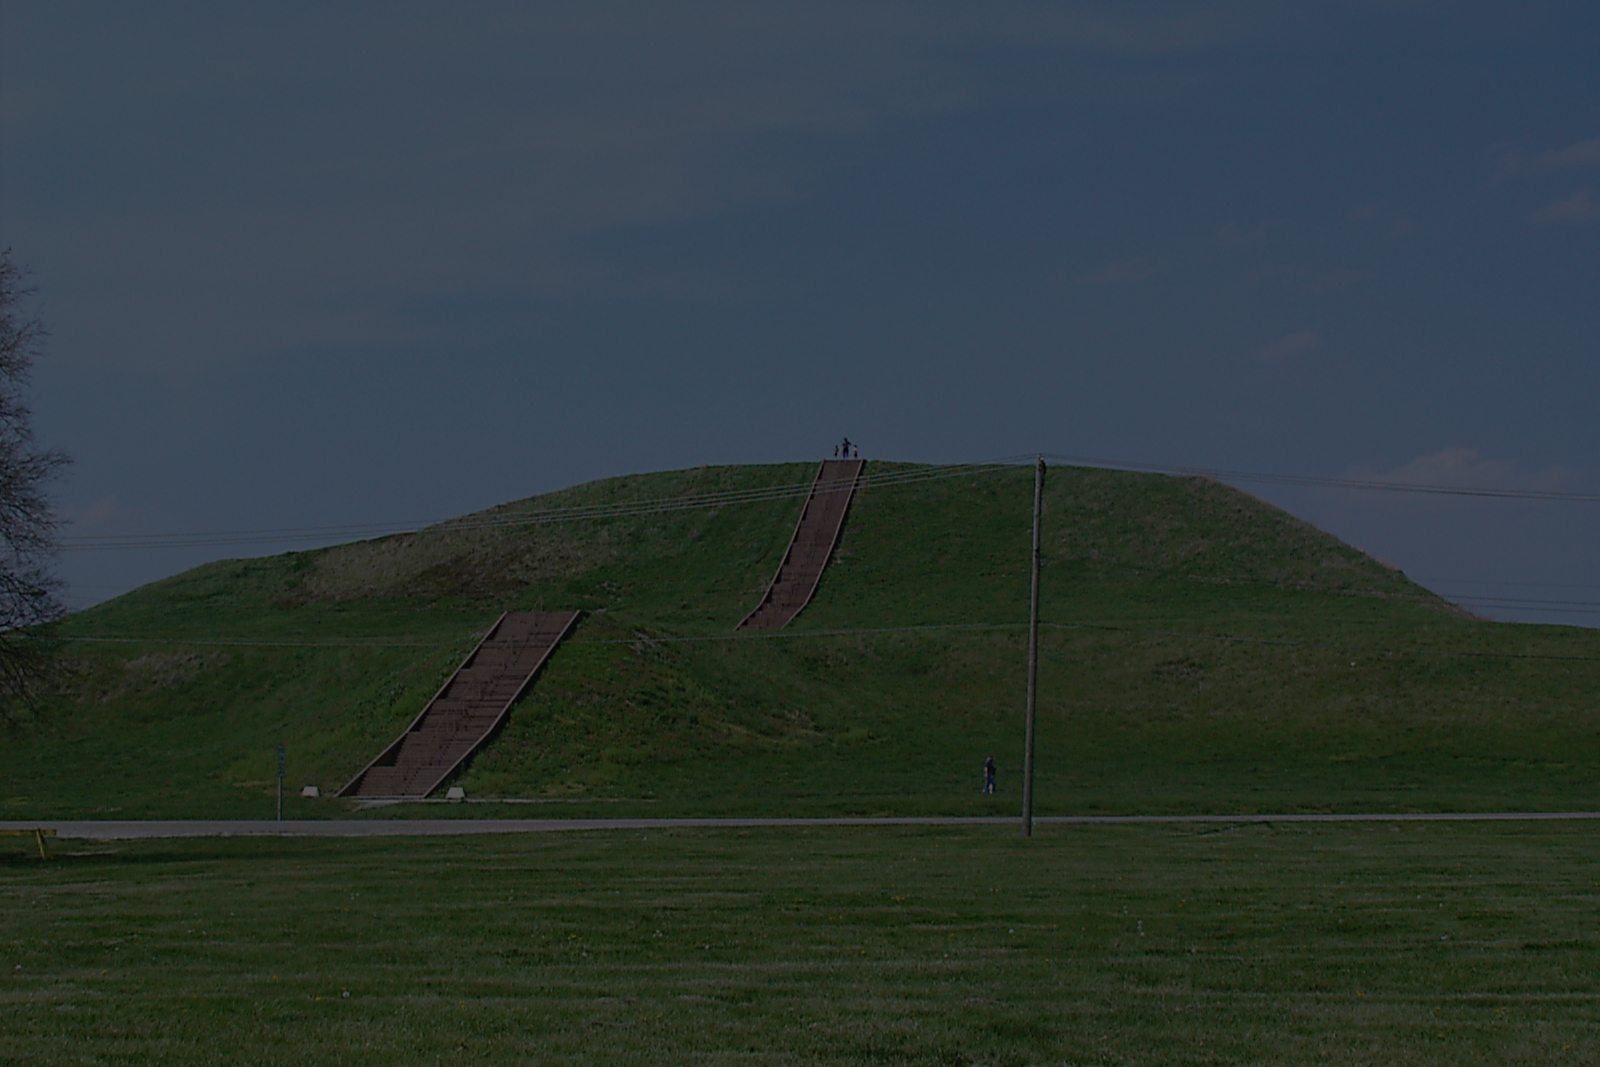 Cahokia Mounds